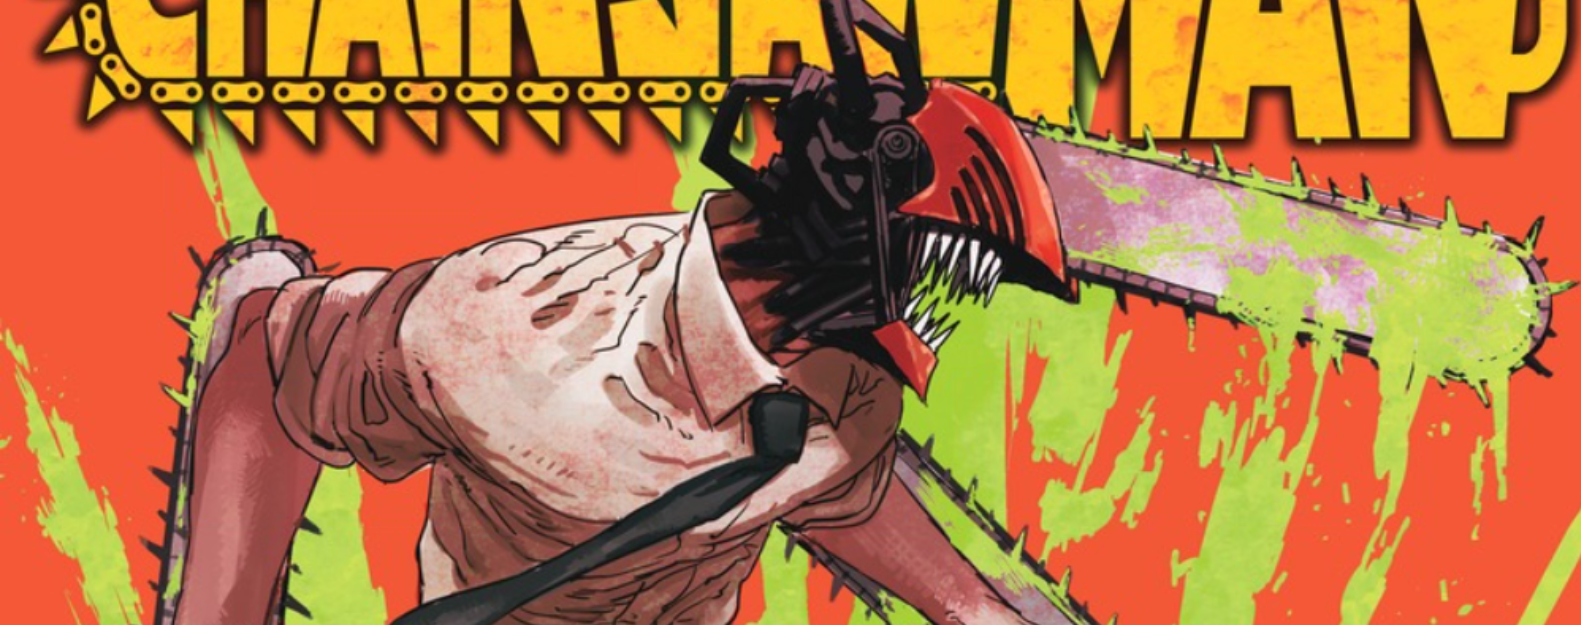 Chainsaw Man Vol. 1 Header image